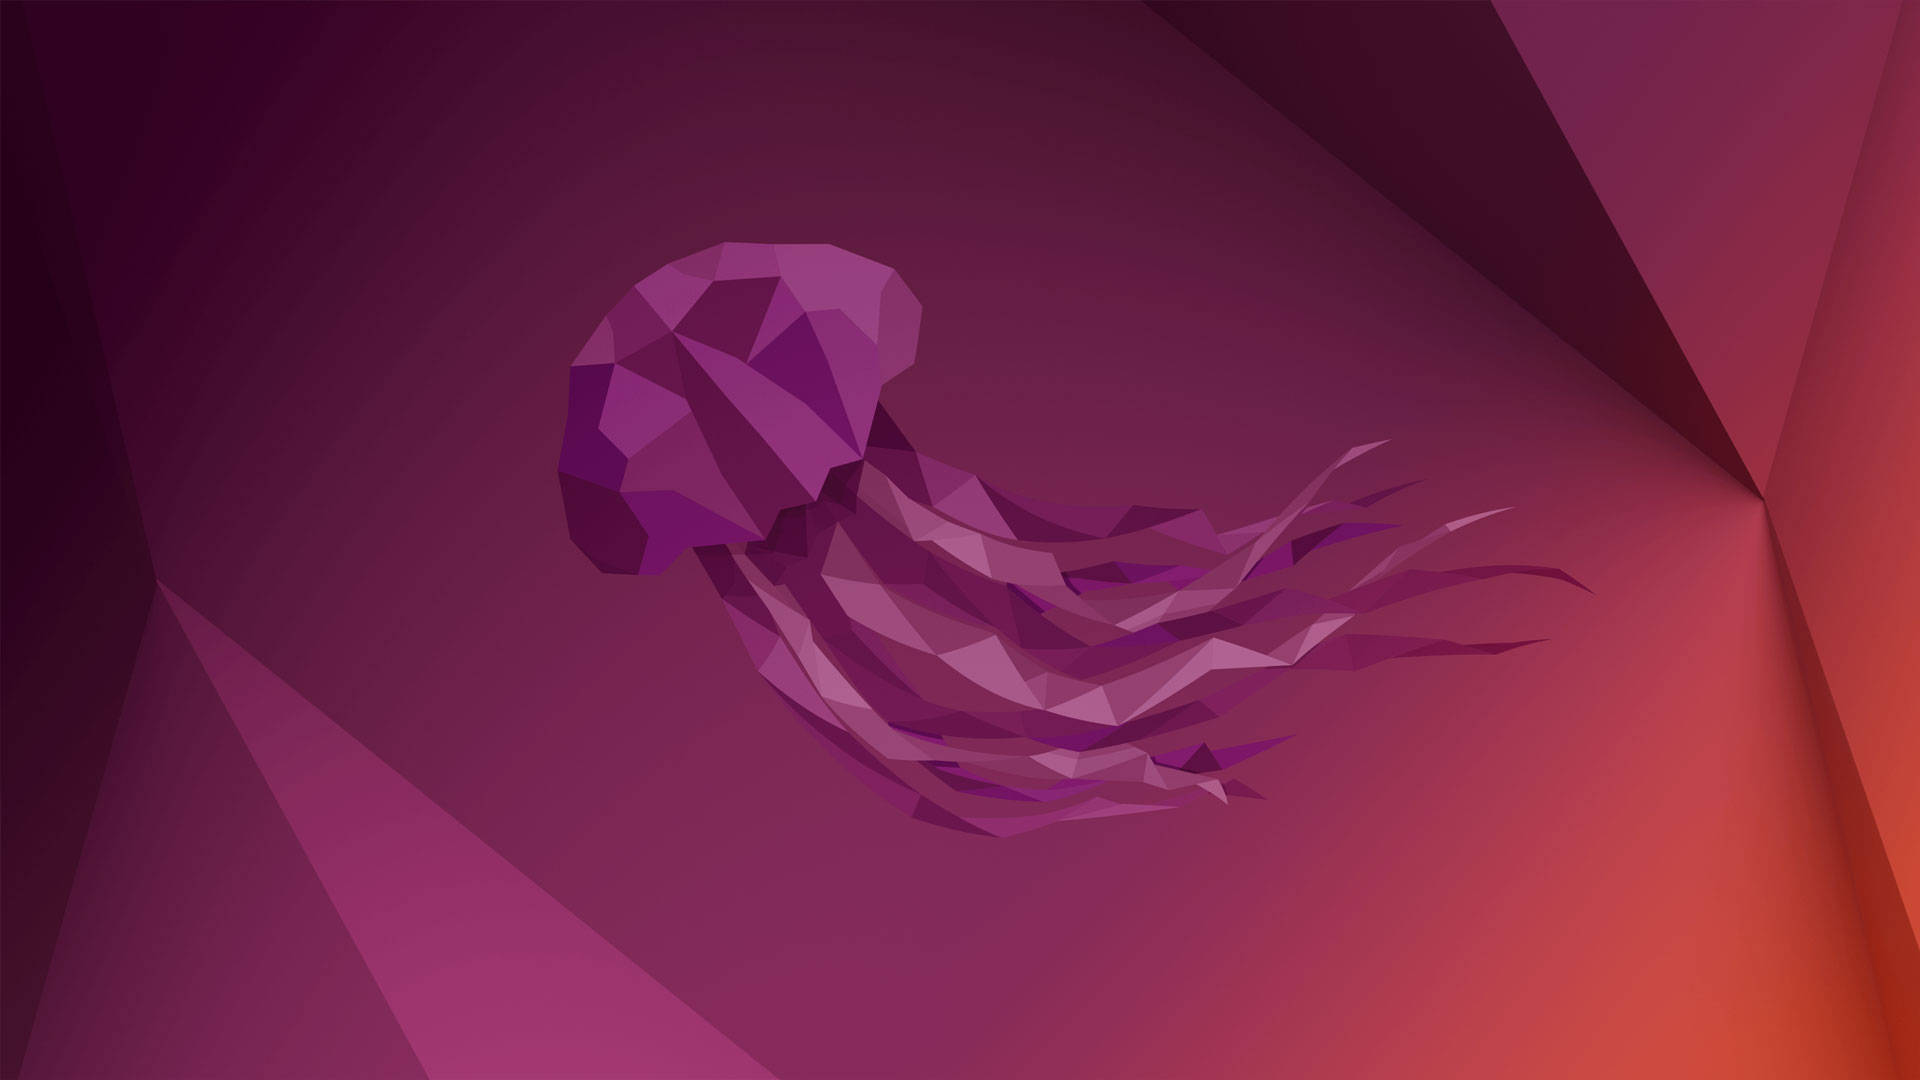 Ubuntu Jellyfish Stock Wallpaper